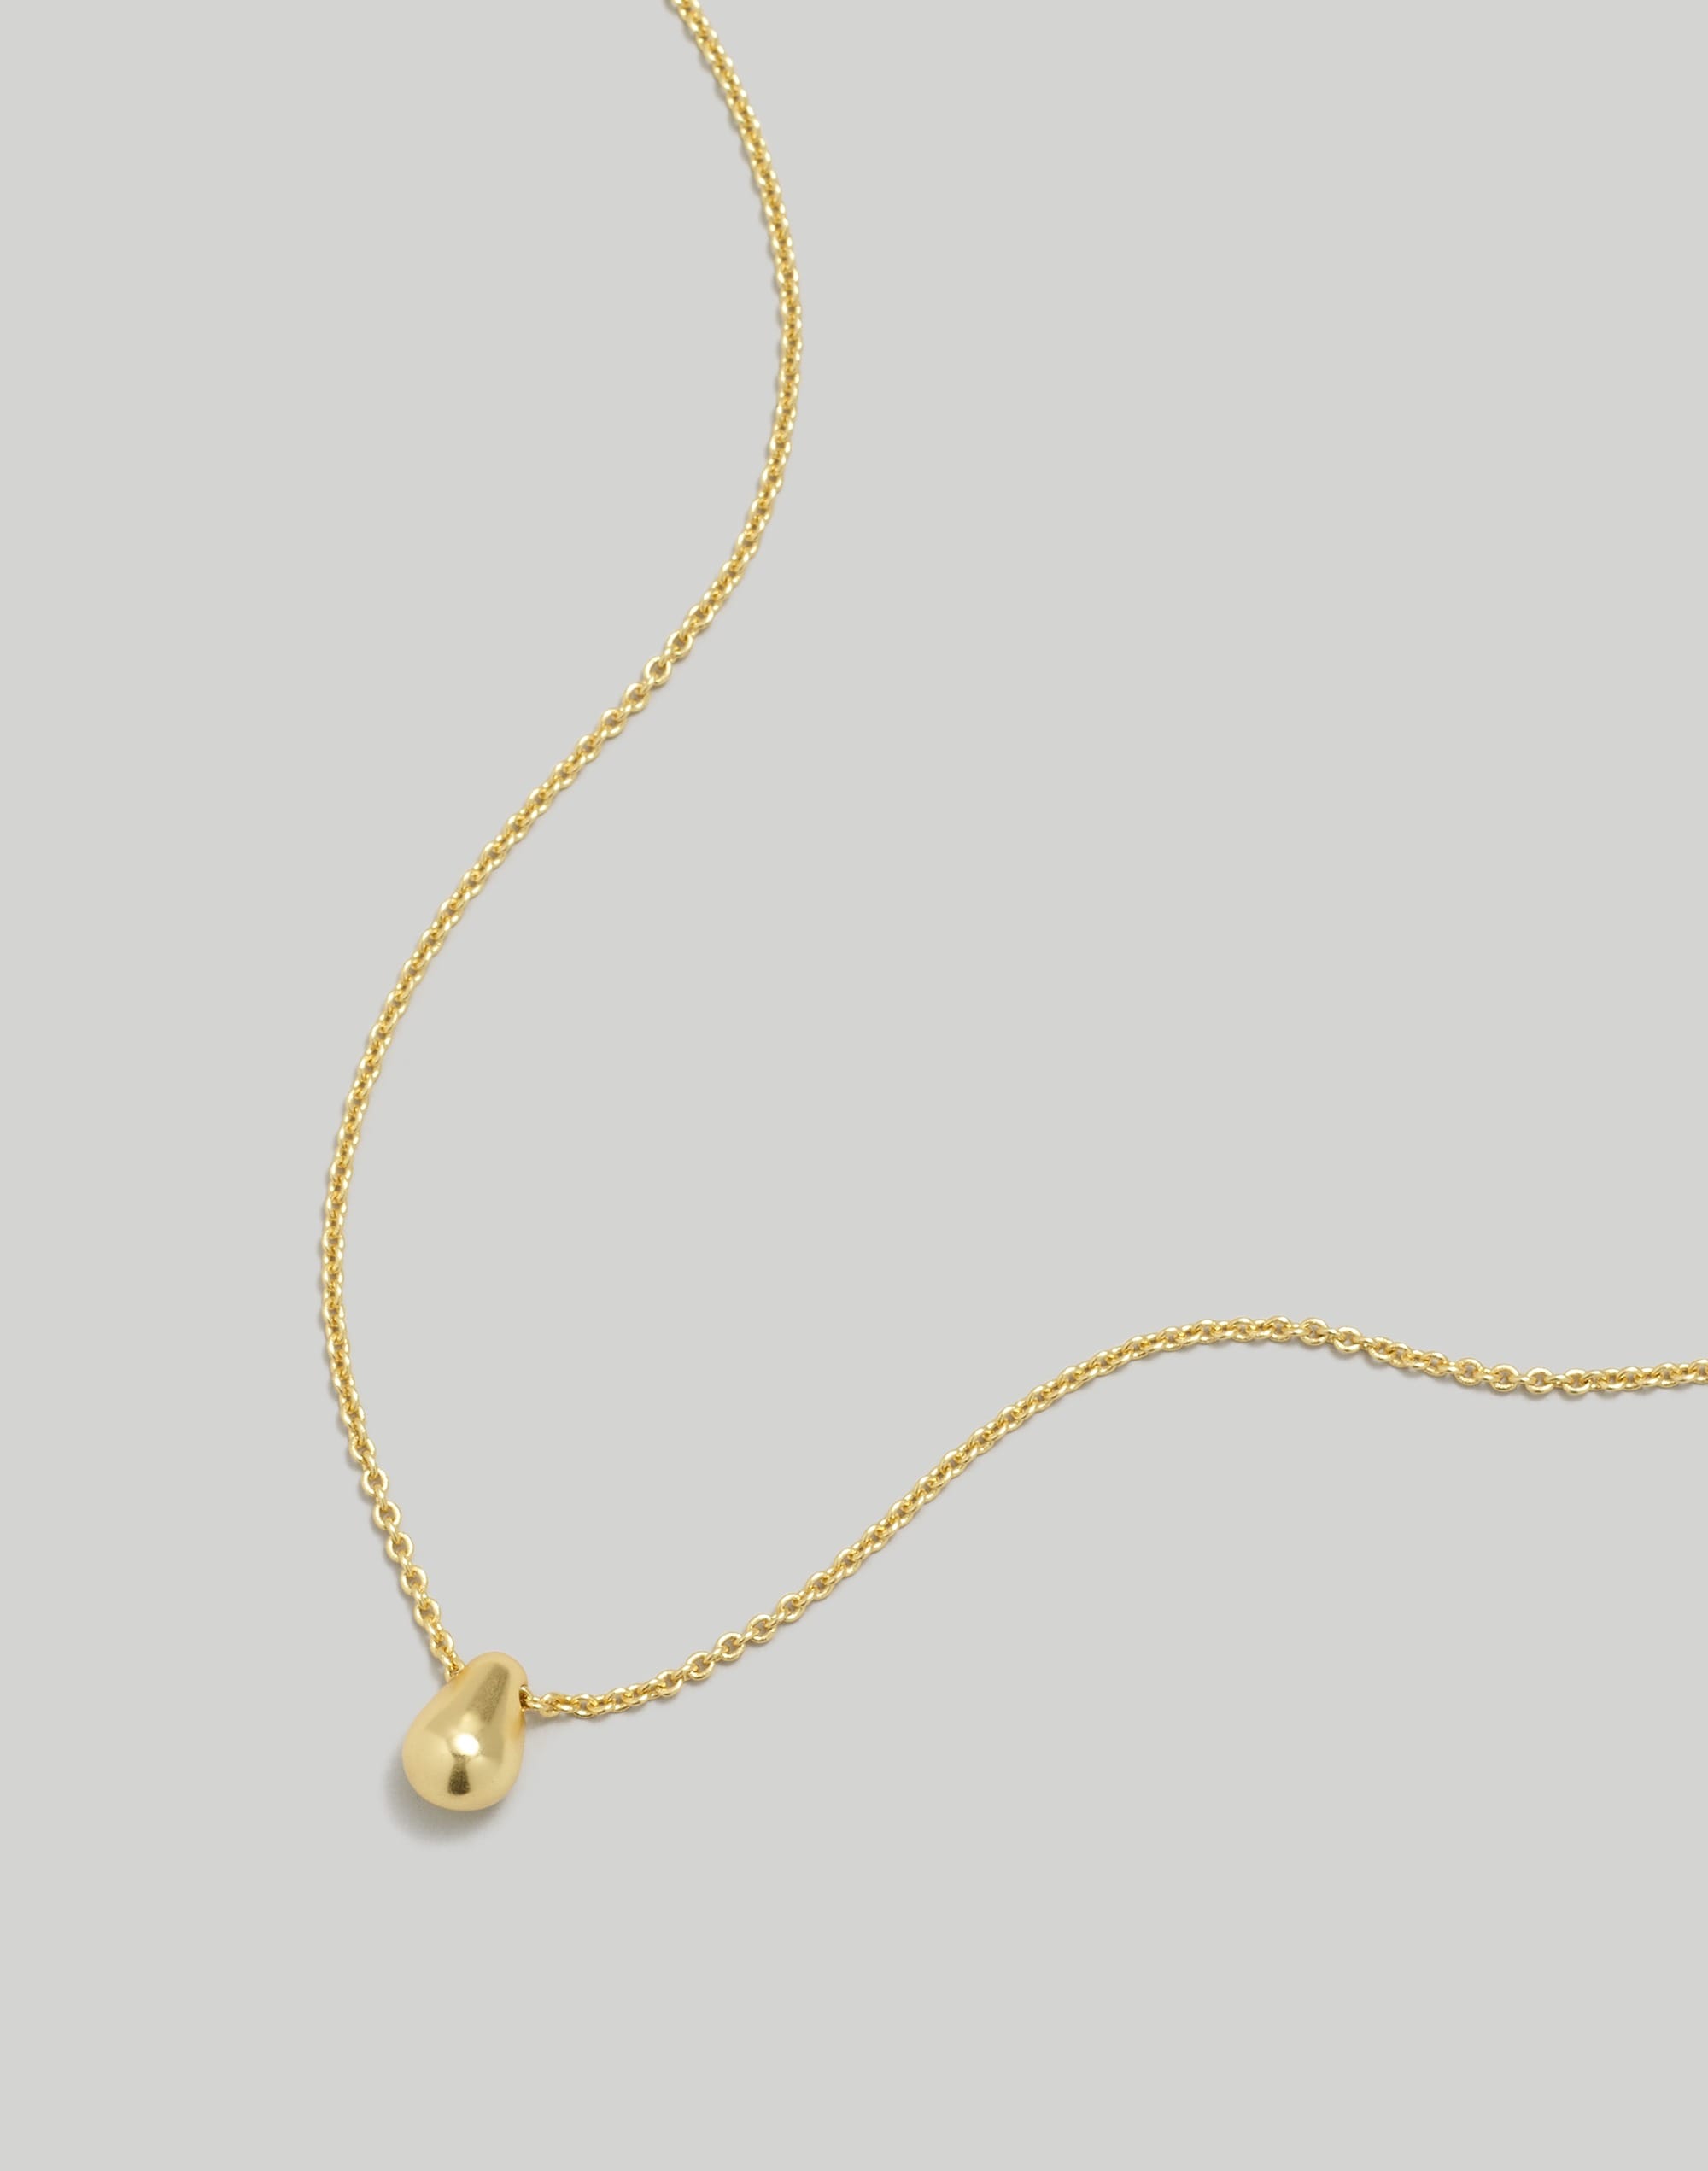 Small Pebble Pendant Necklace Gold Cord